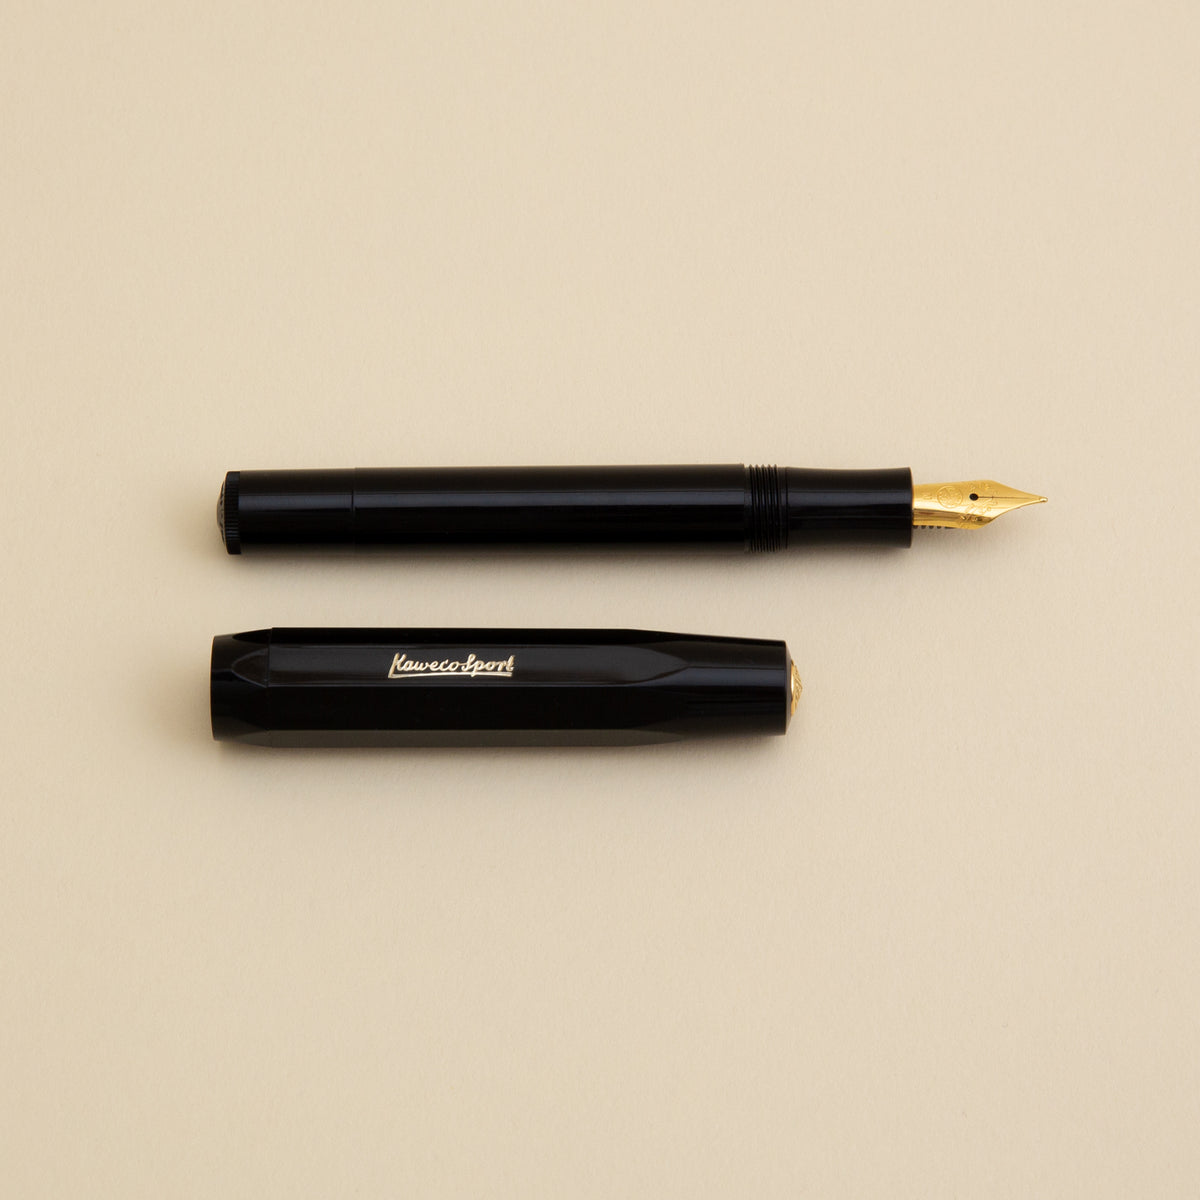 Kaweco Sport Fountain Pen - Black